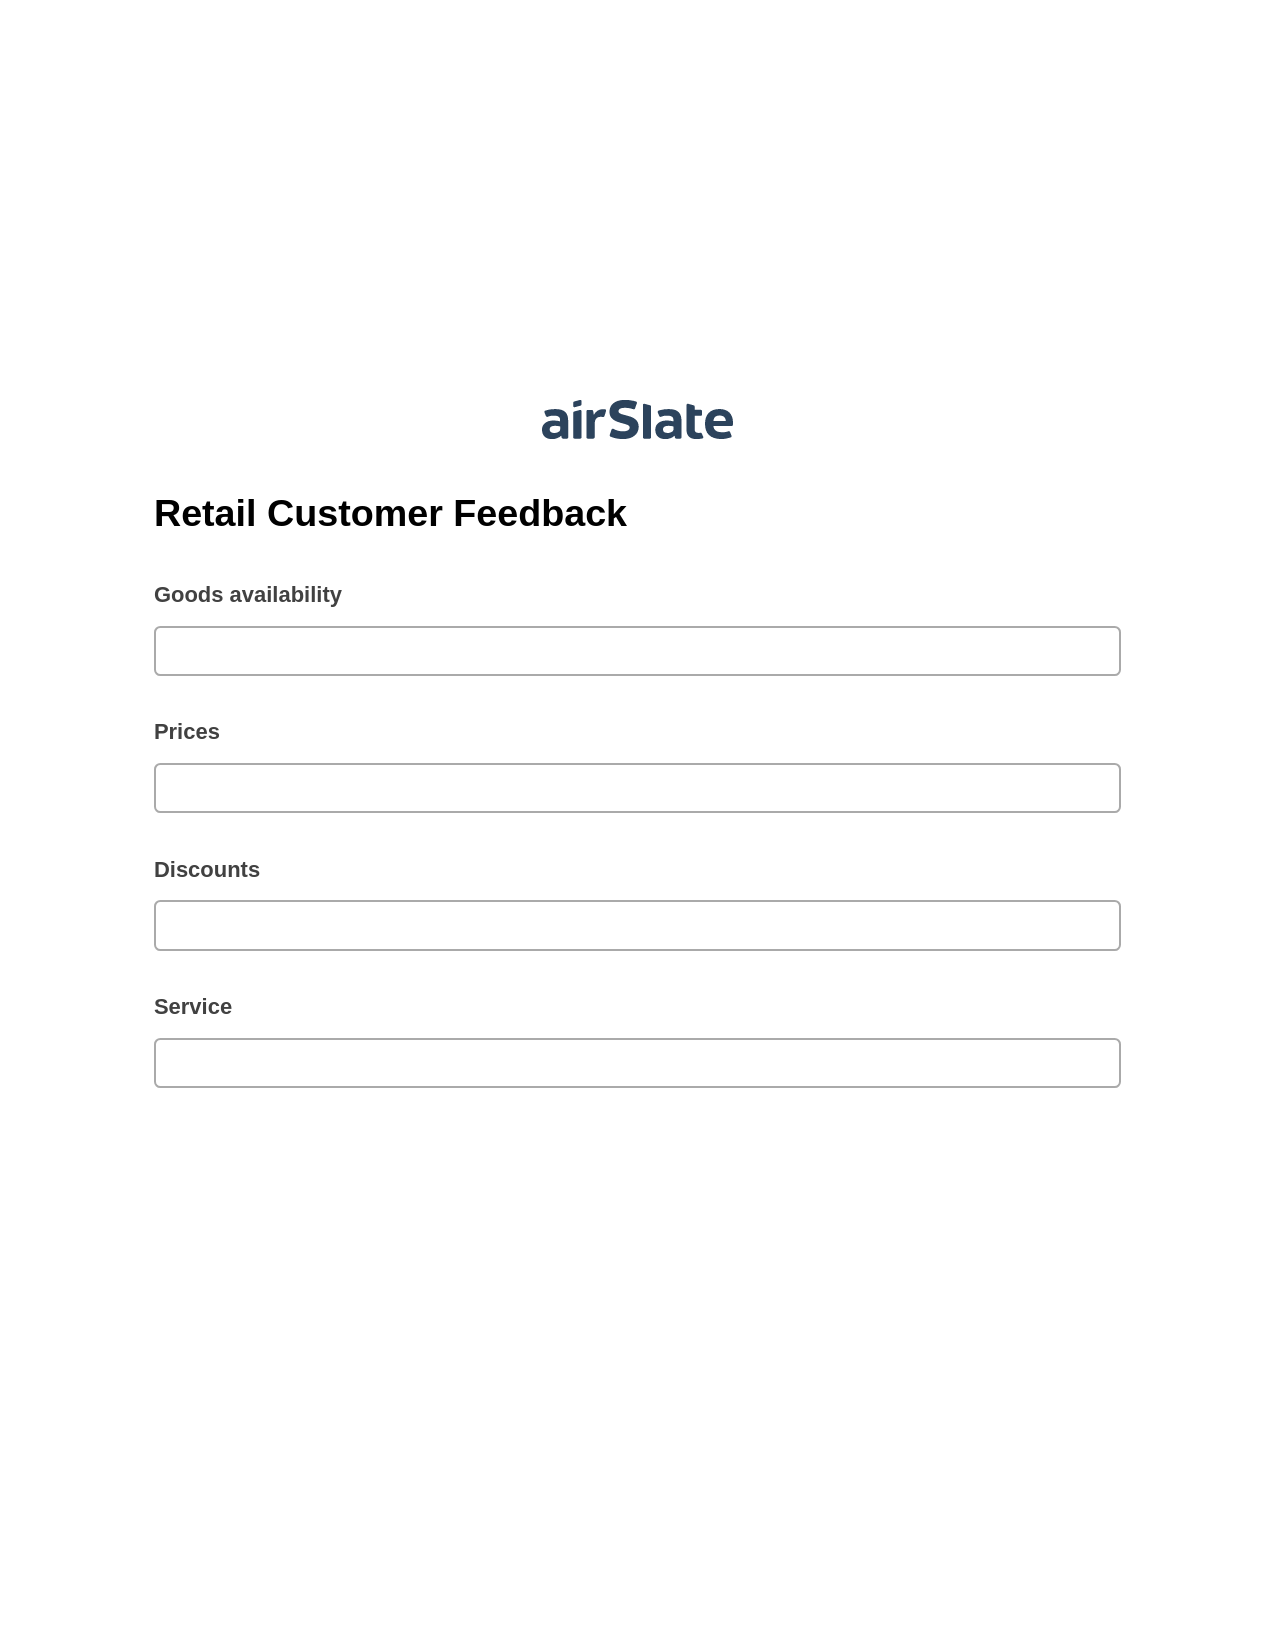 Multirole Retail Customer Feedback Pre-fill Slate from MS Dynamics 365 Records Bot, SendGrid send Campaign bot, Slack Notification Postfinish Bot